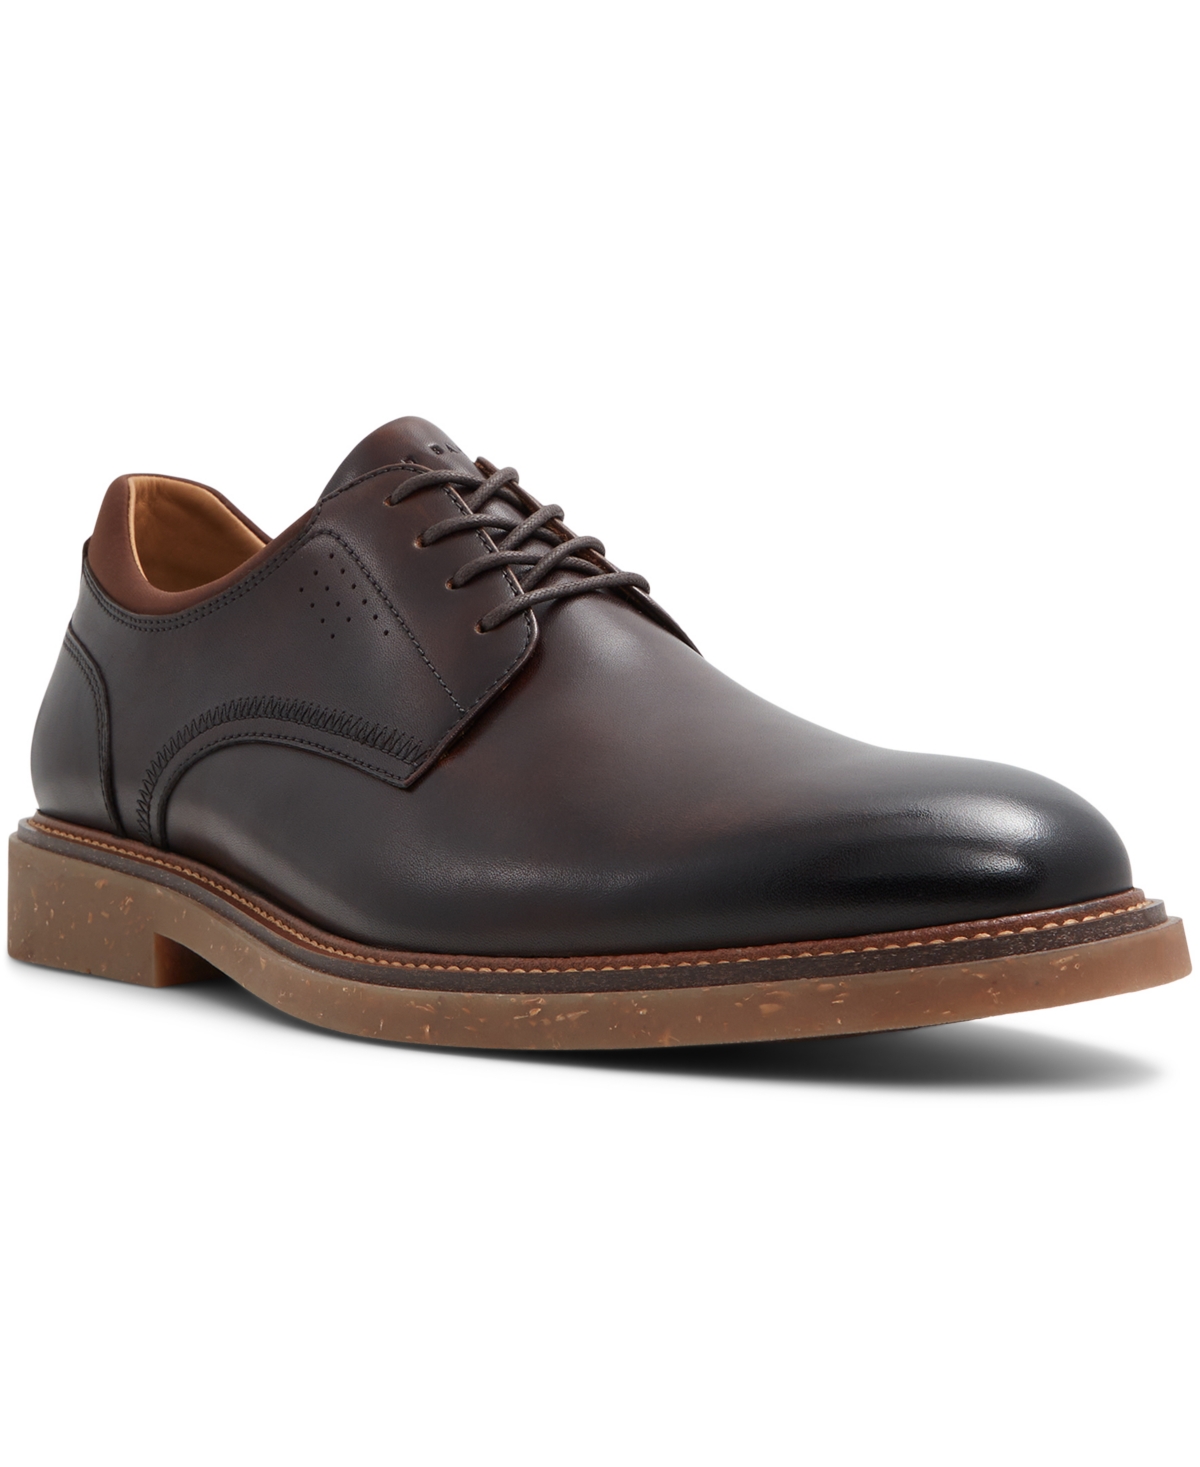 Men's Swanley Derby Dress Shoes - Brown